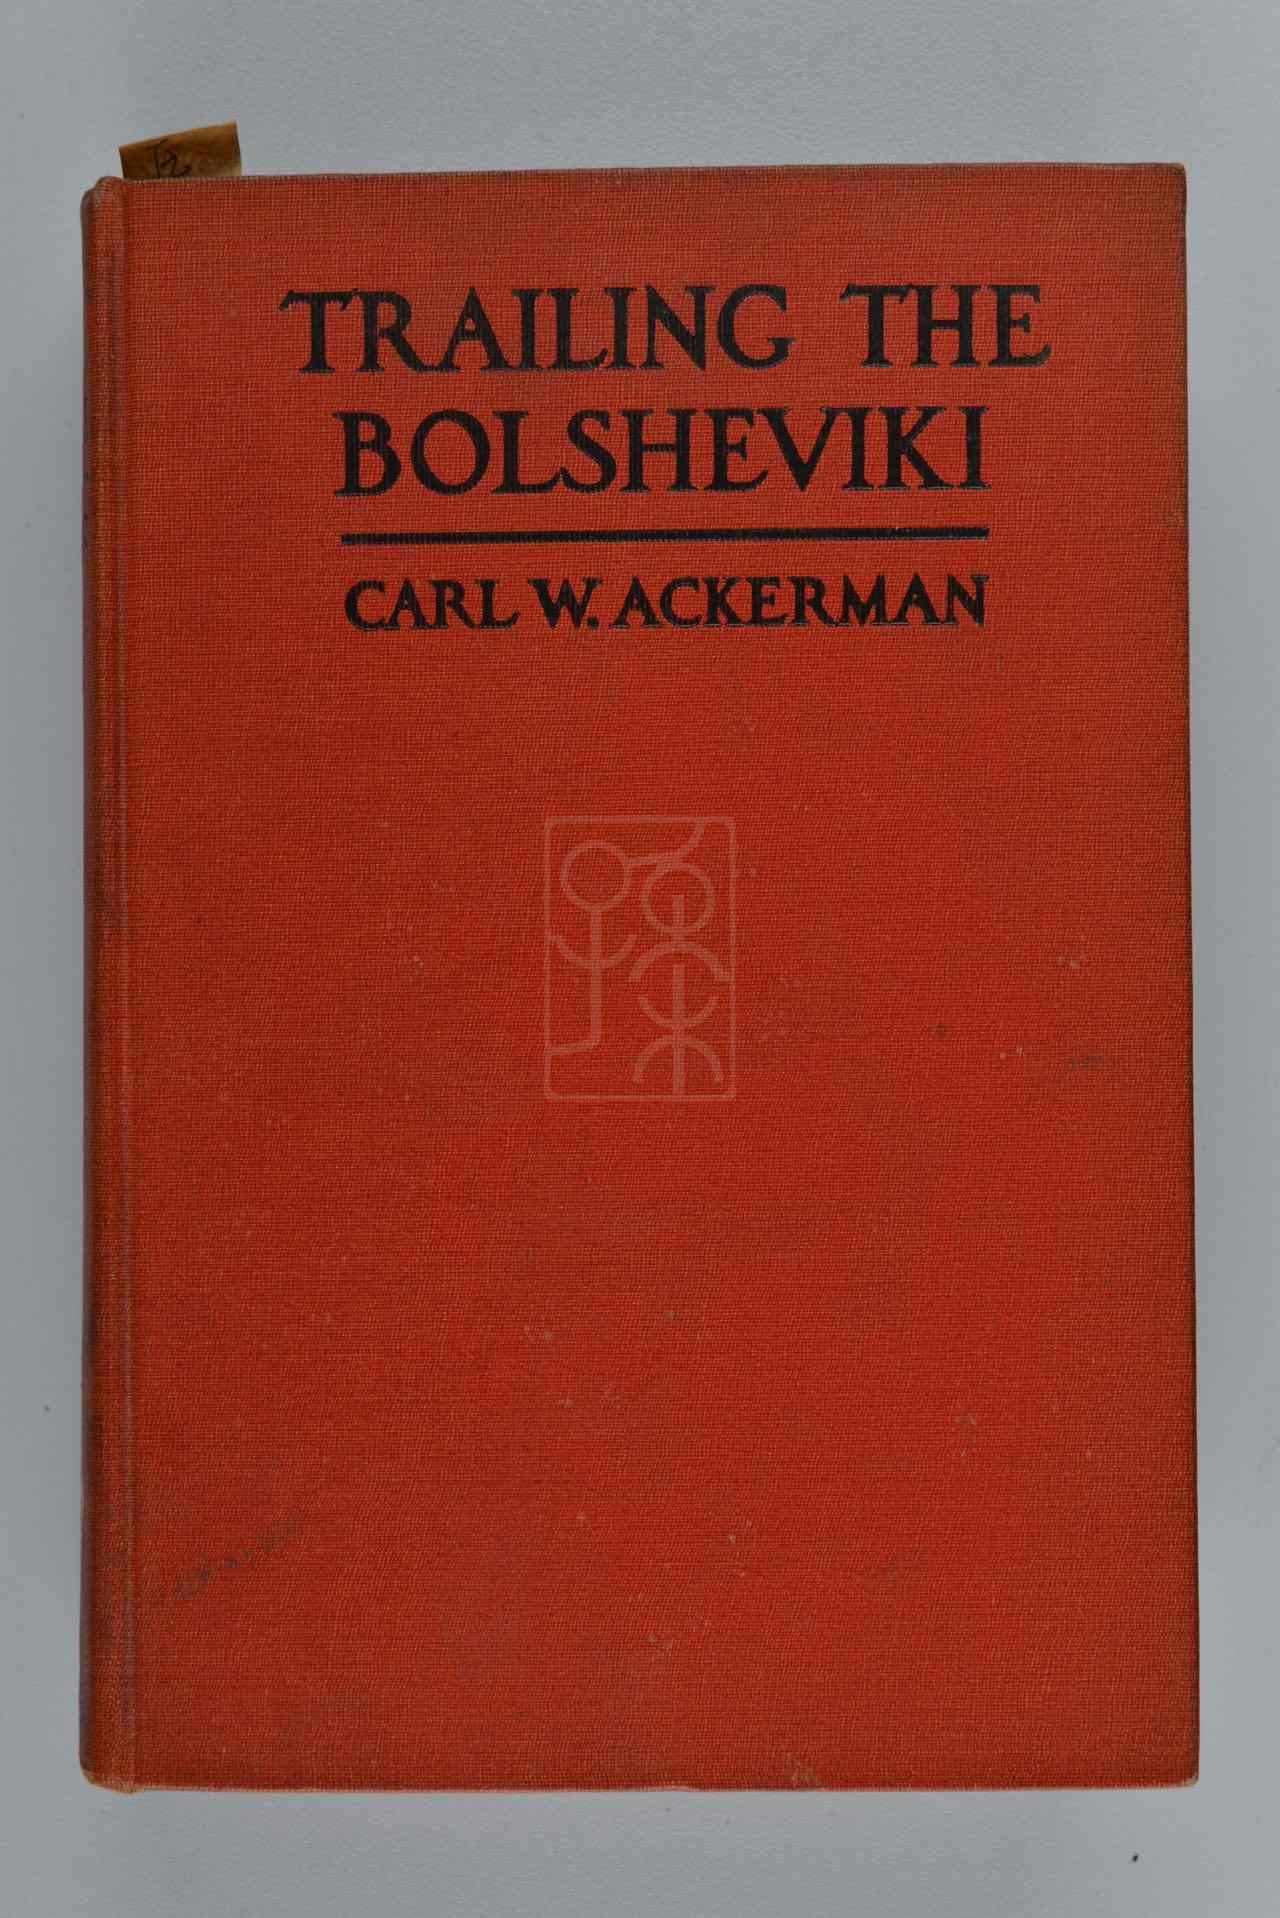 1919年版《追踪布尔什维克》（Trailing the Bolsheviki）